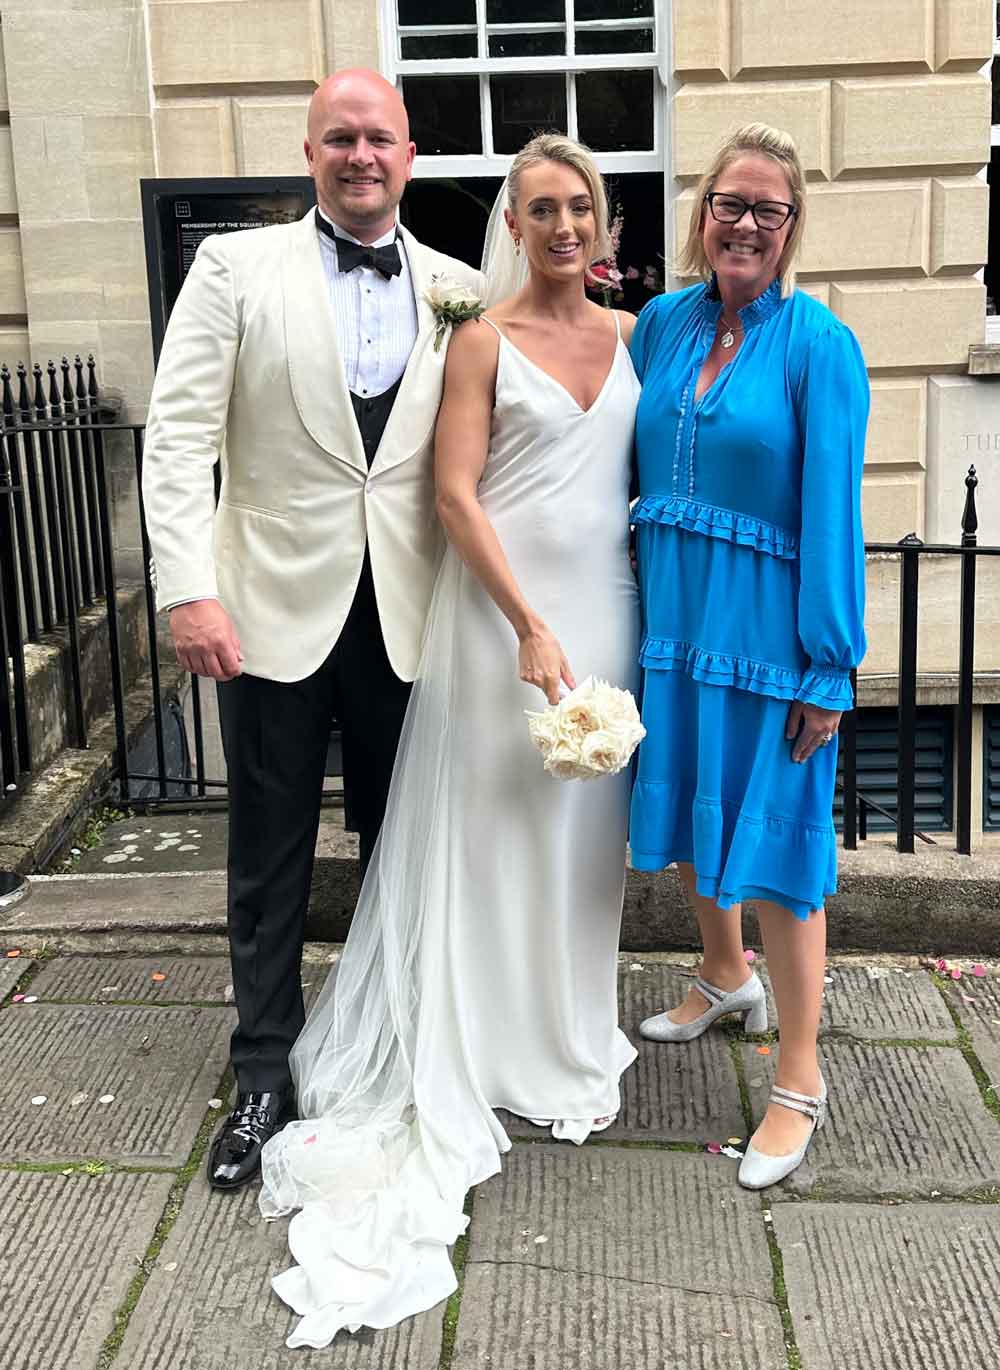 Newlyweds with Tara the Celebrant at their celebrant-led wedding in Bristol